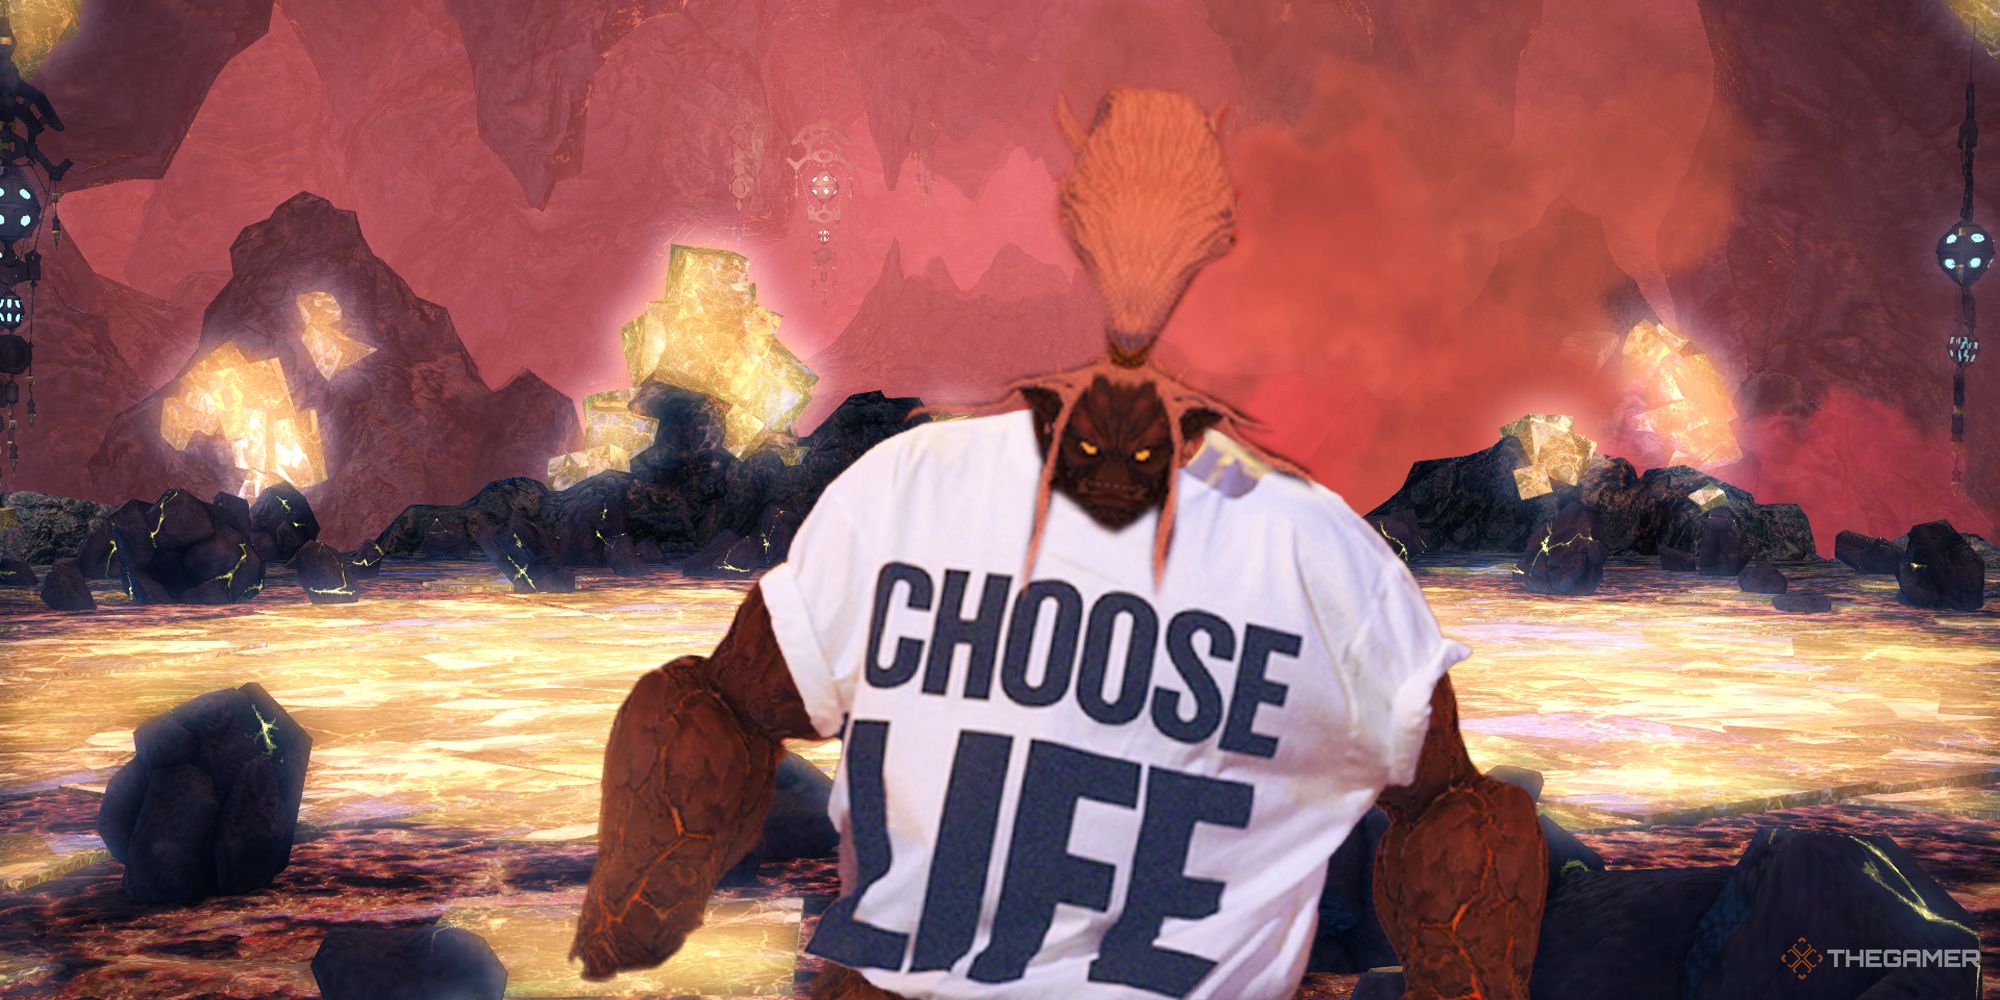 Titan from Final Fantasy 14 wearing Wham's 'Choose Life' t-shirt.